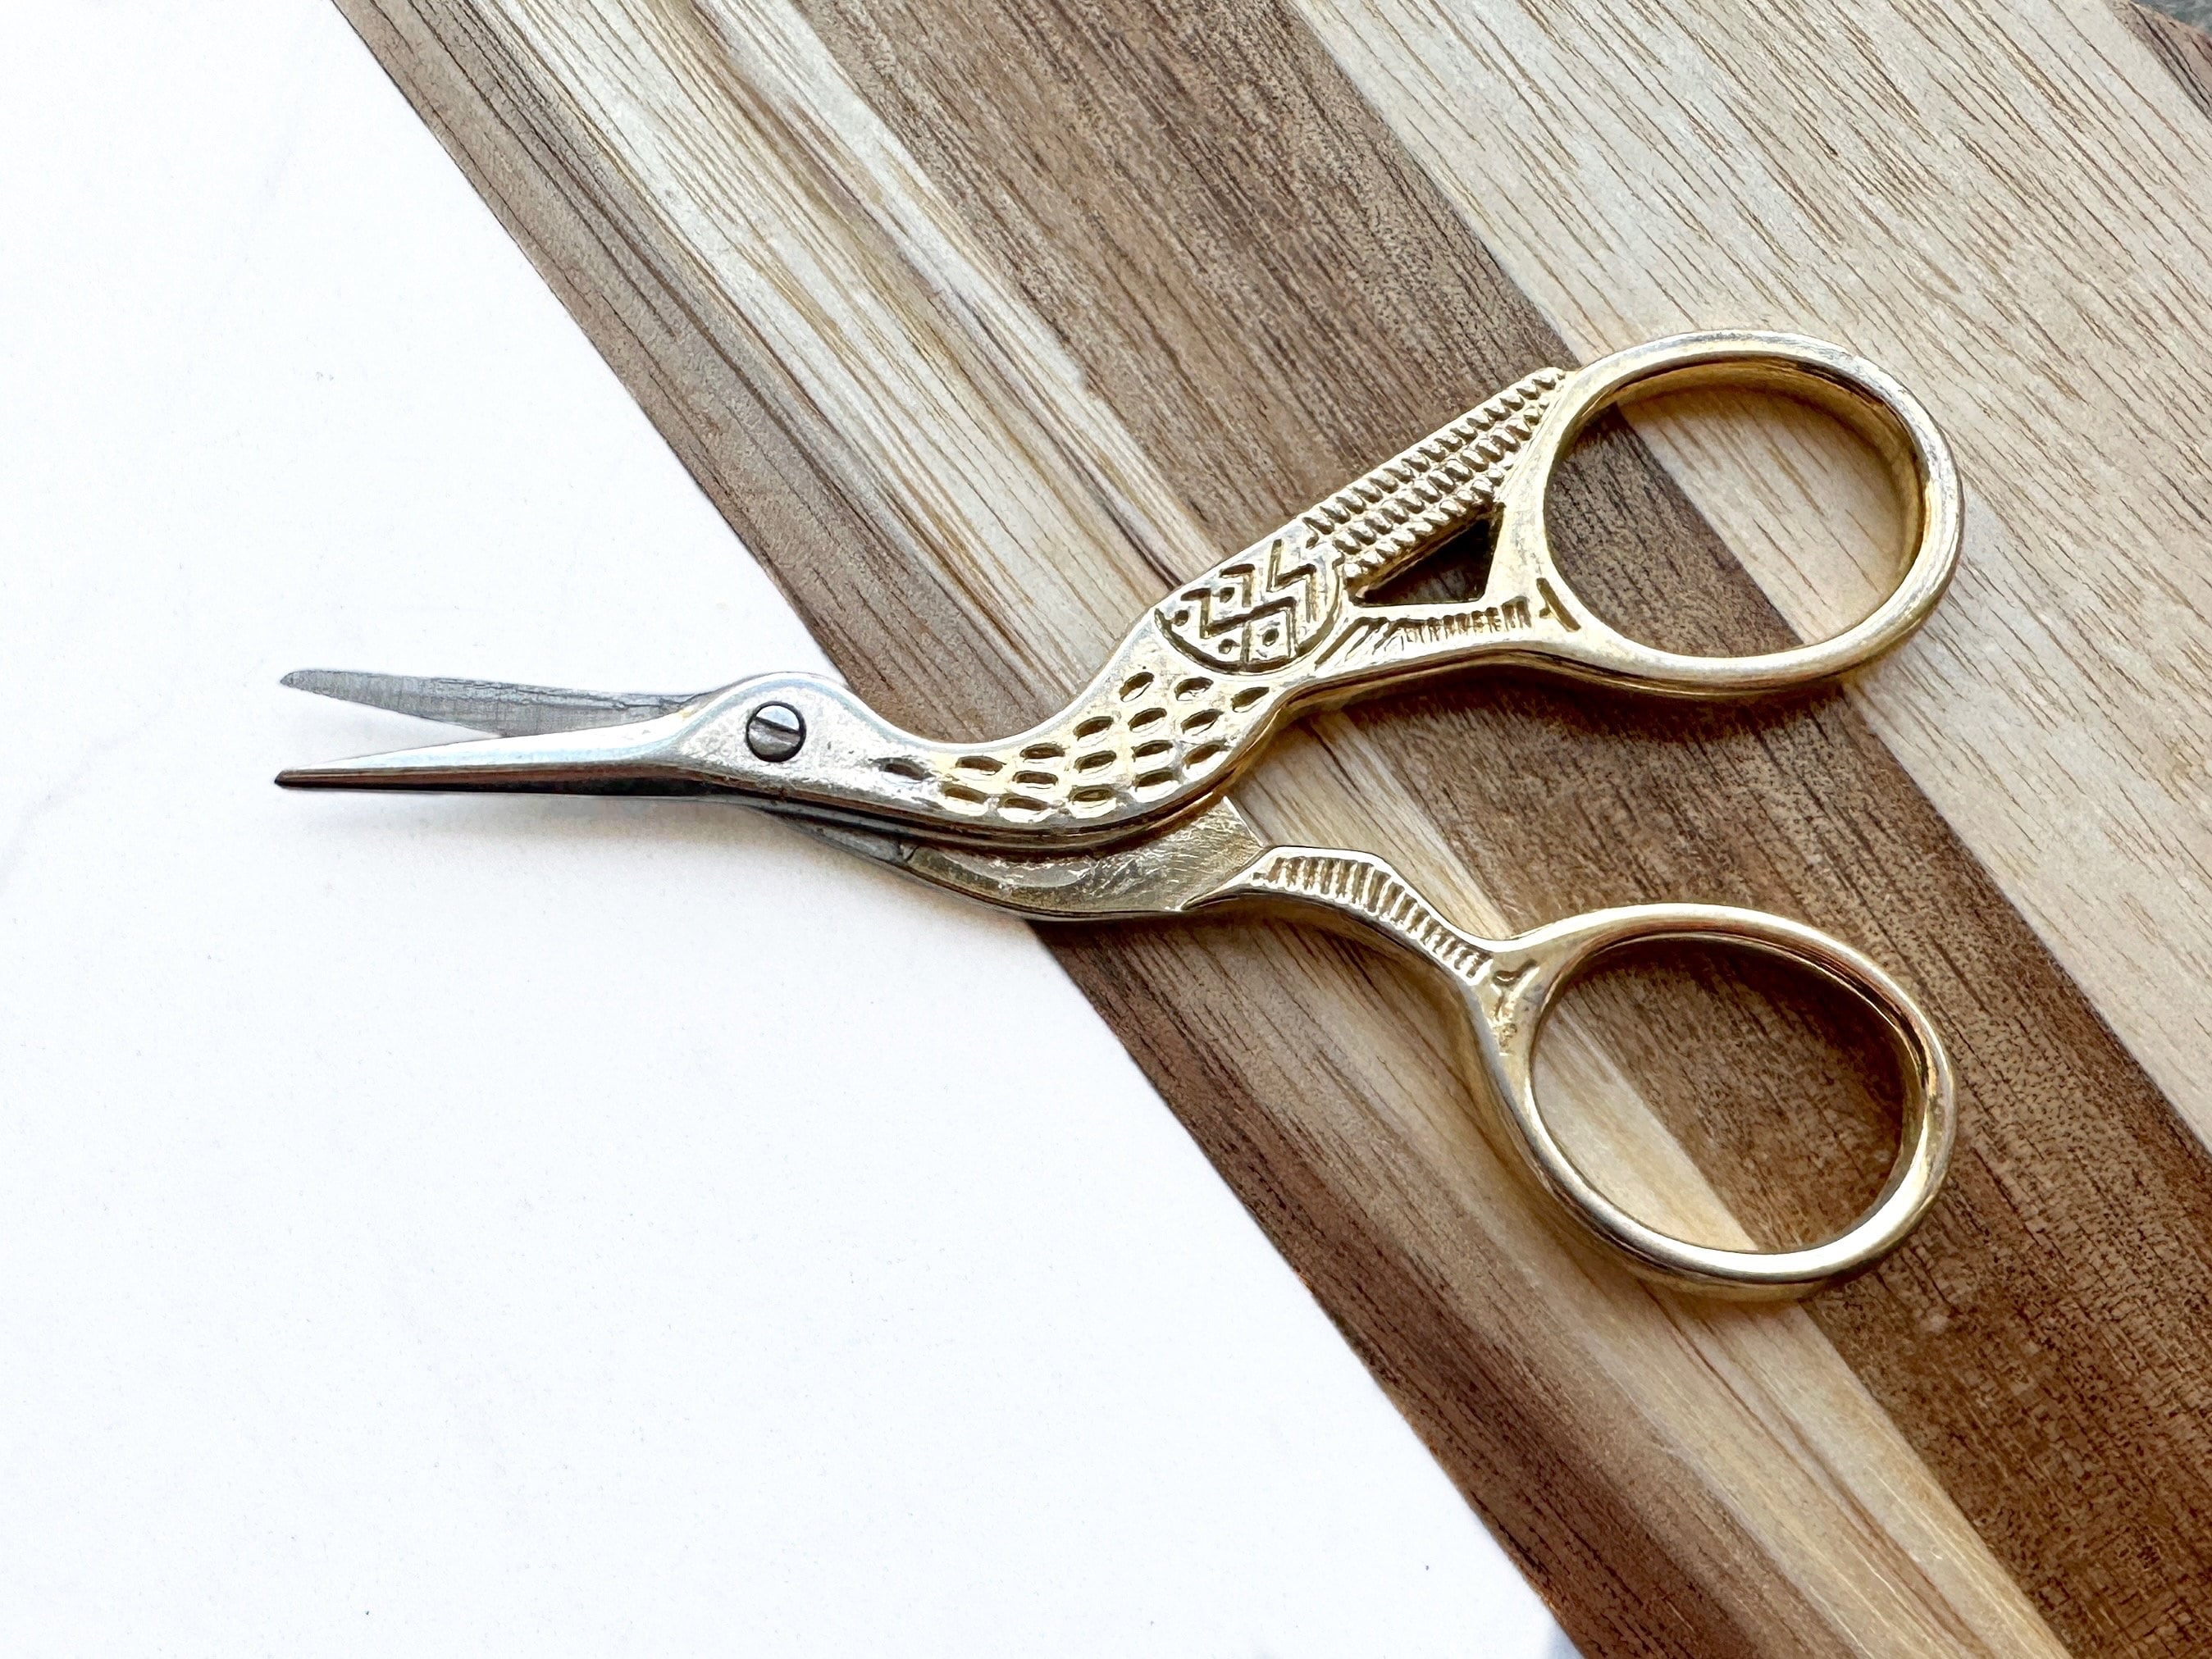 Fiskars Fashion Scissors Designed by WIFE NYC 